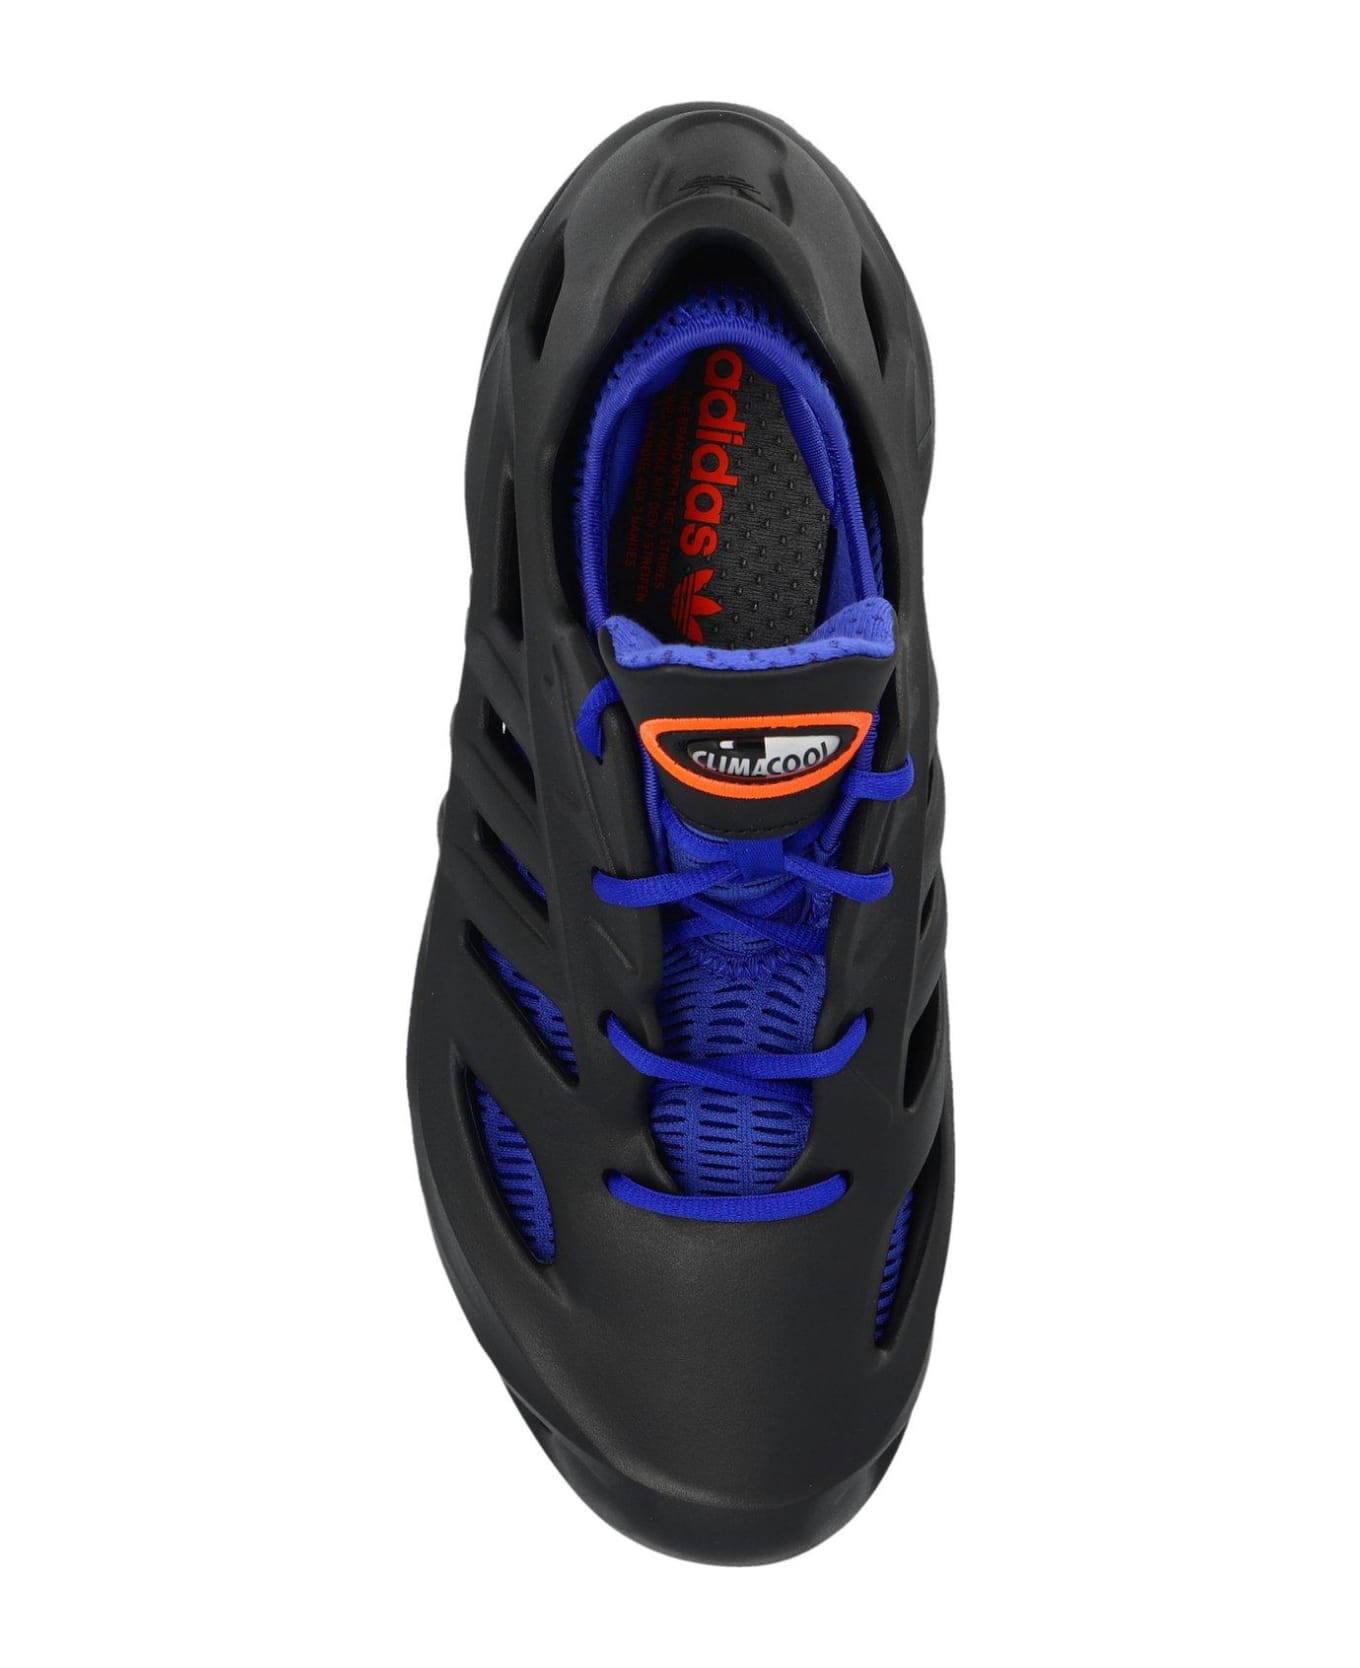 Adidas Originals Adiform Climacool Low-top Sneakers - Black